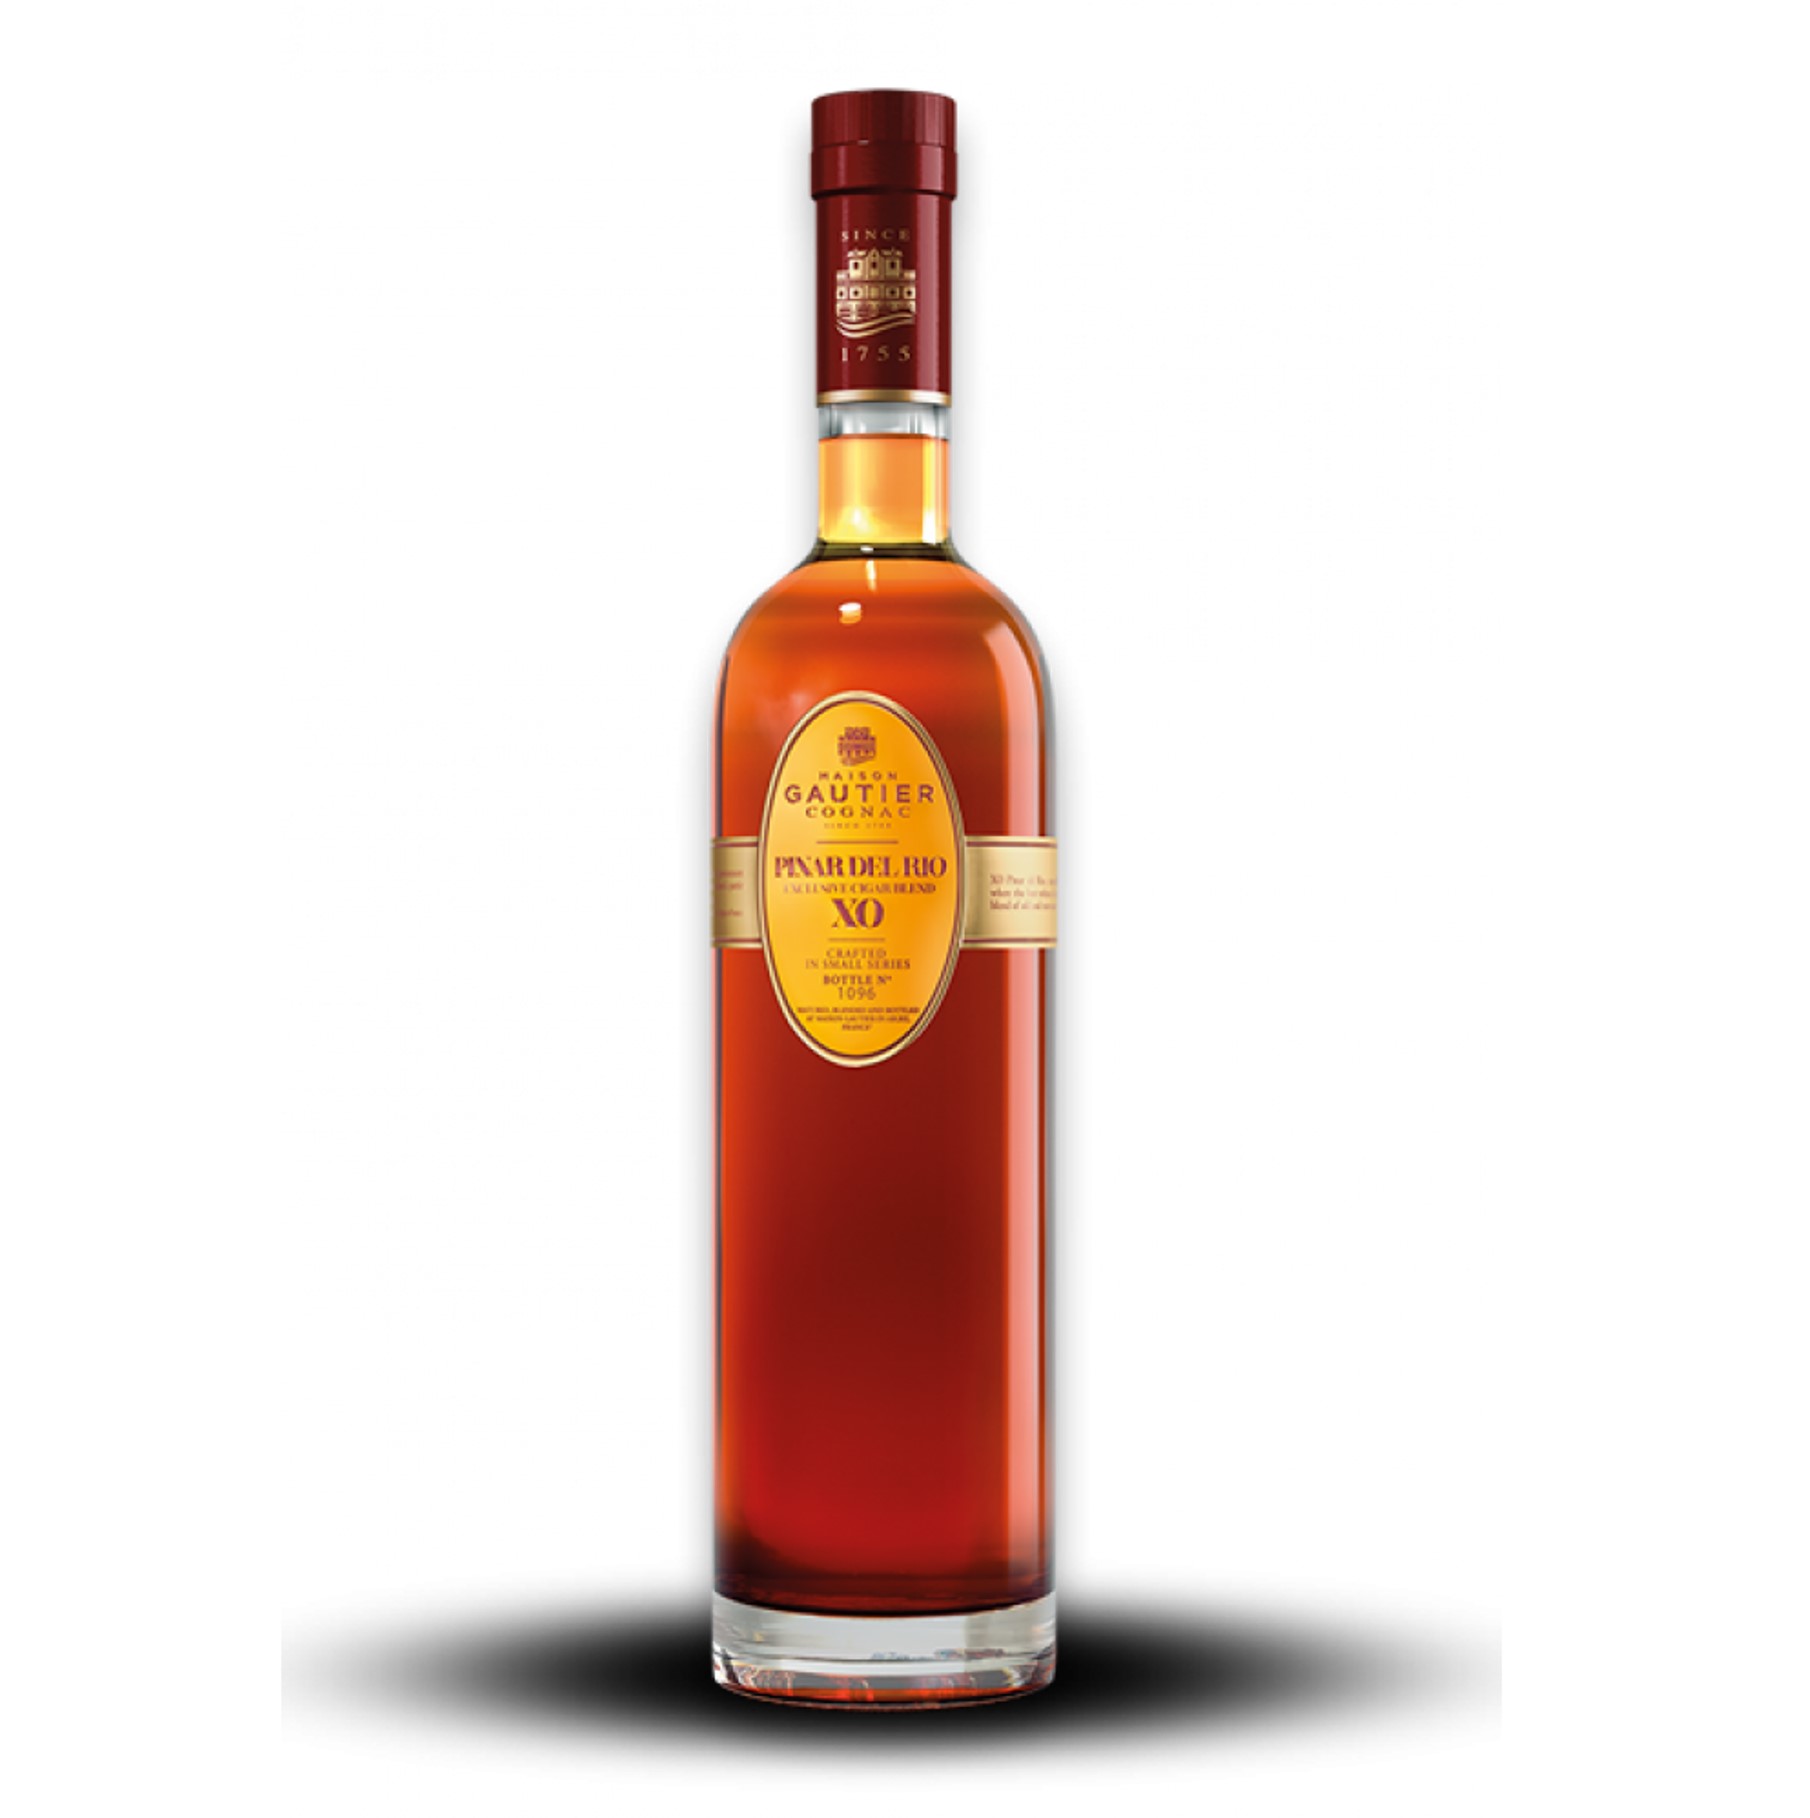 Discover Cognac